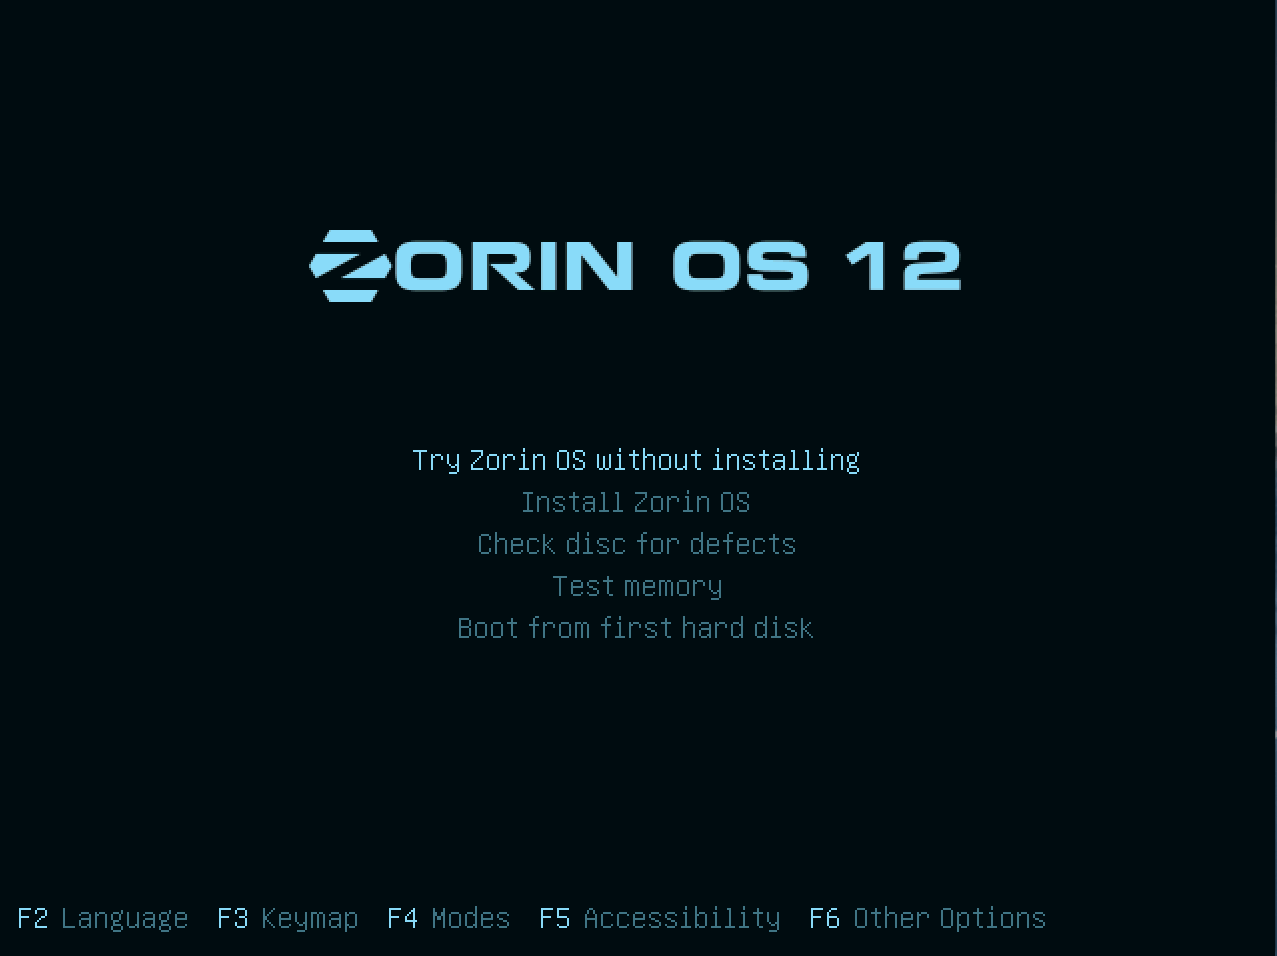 Install Zorin OS 12